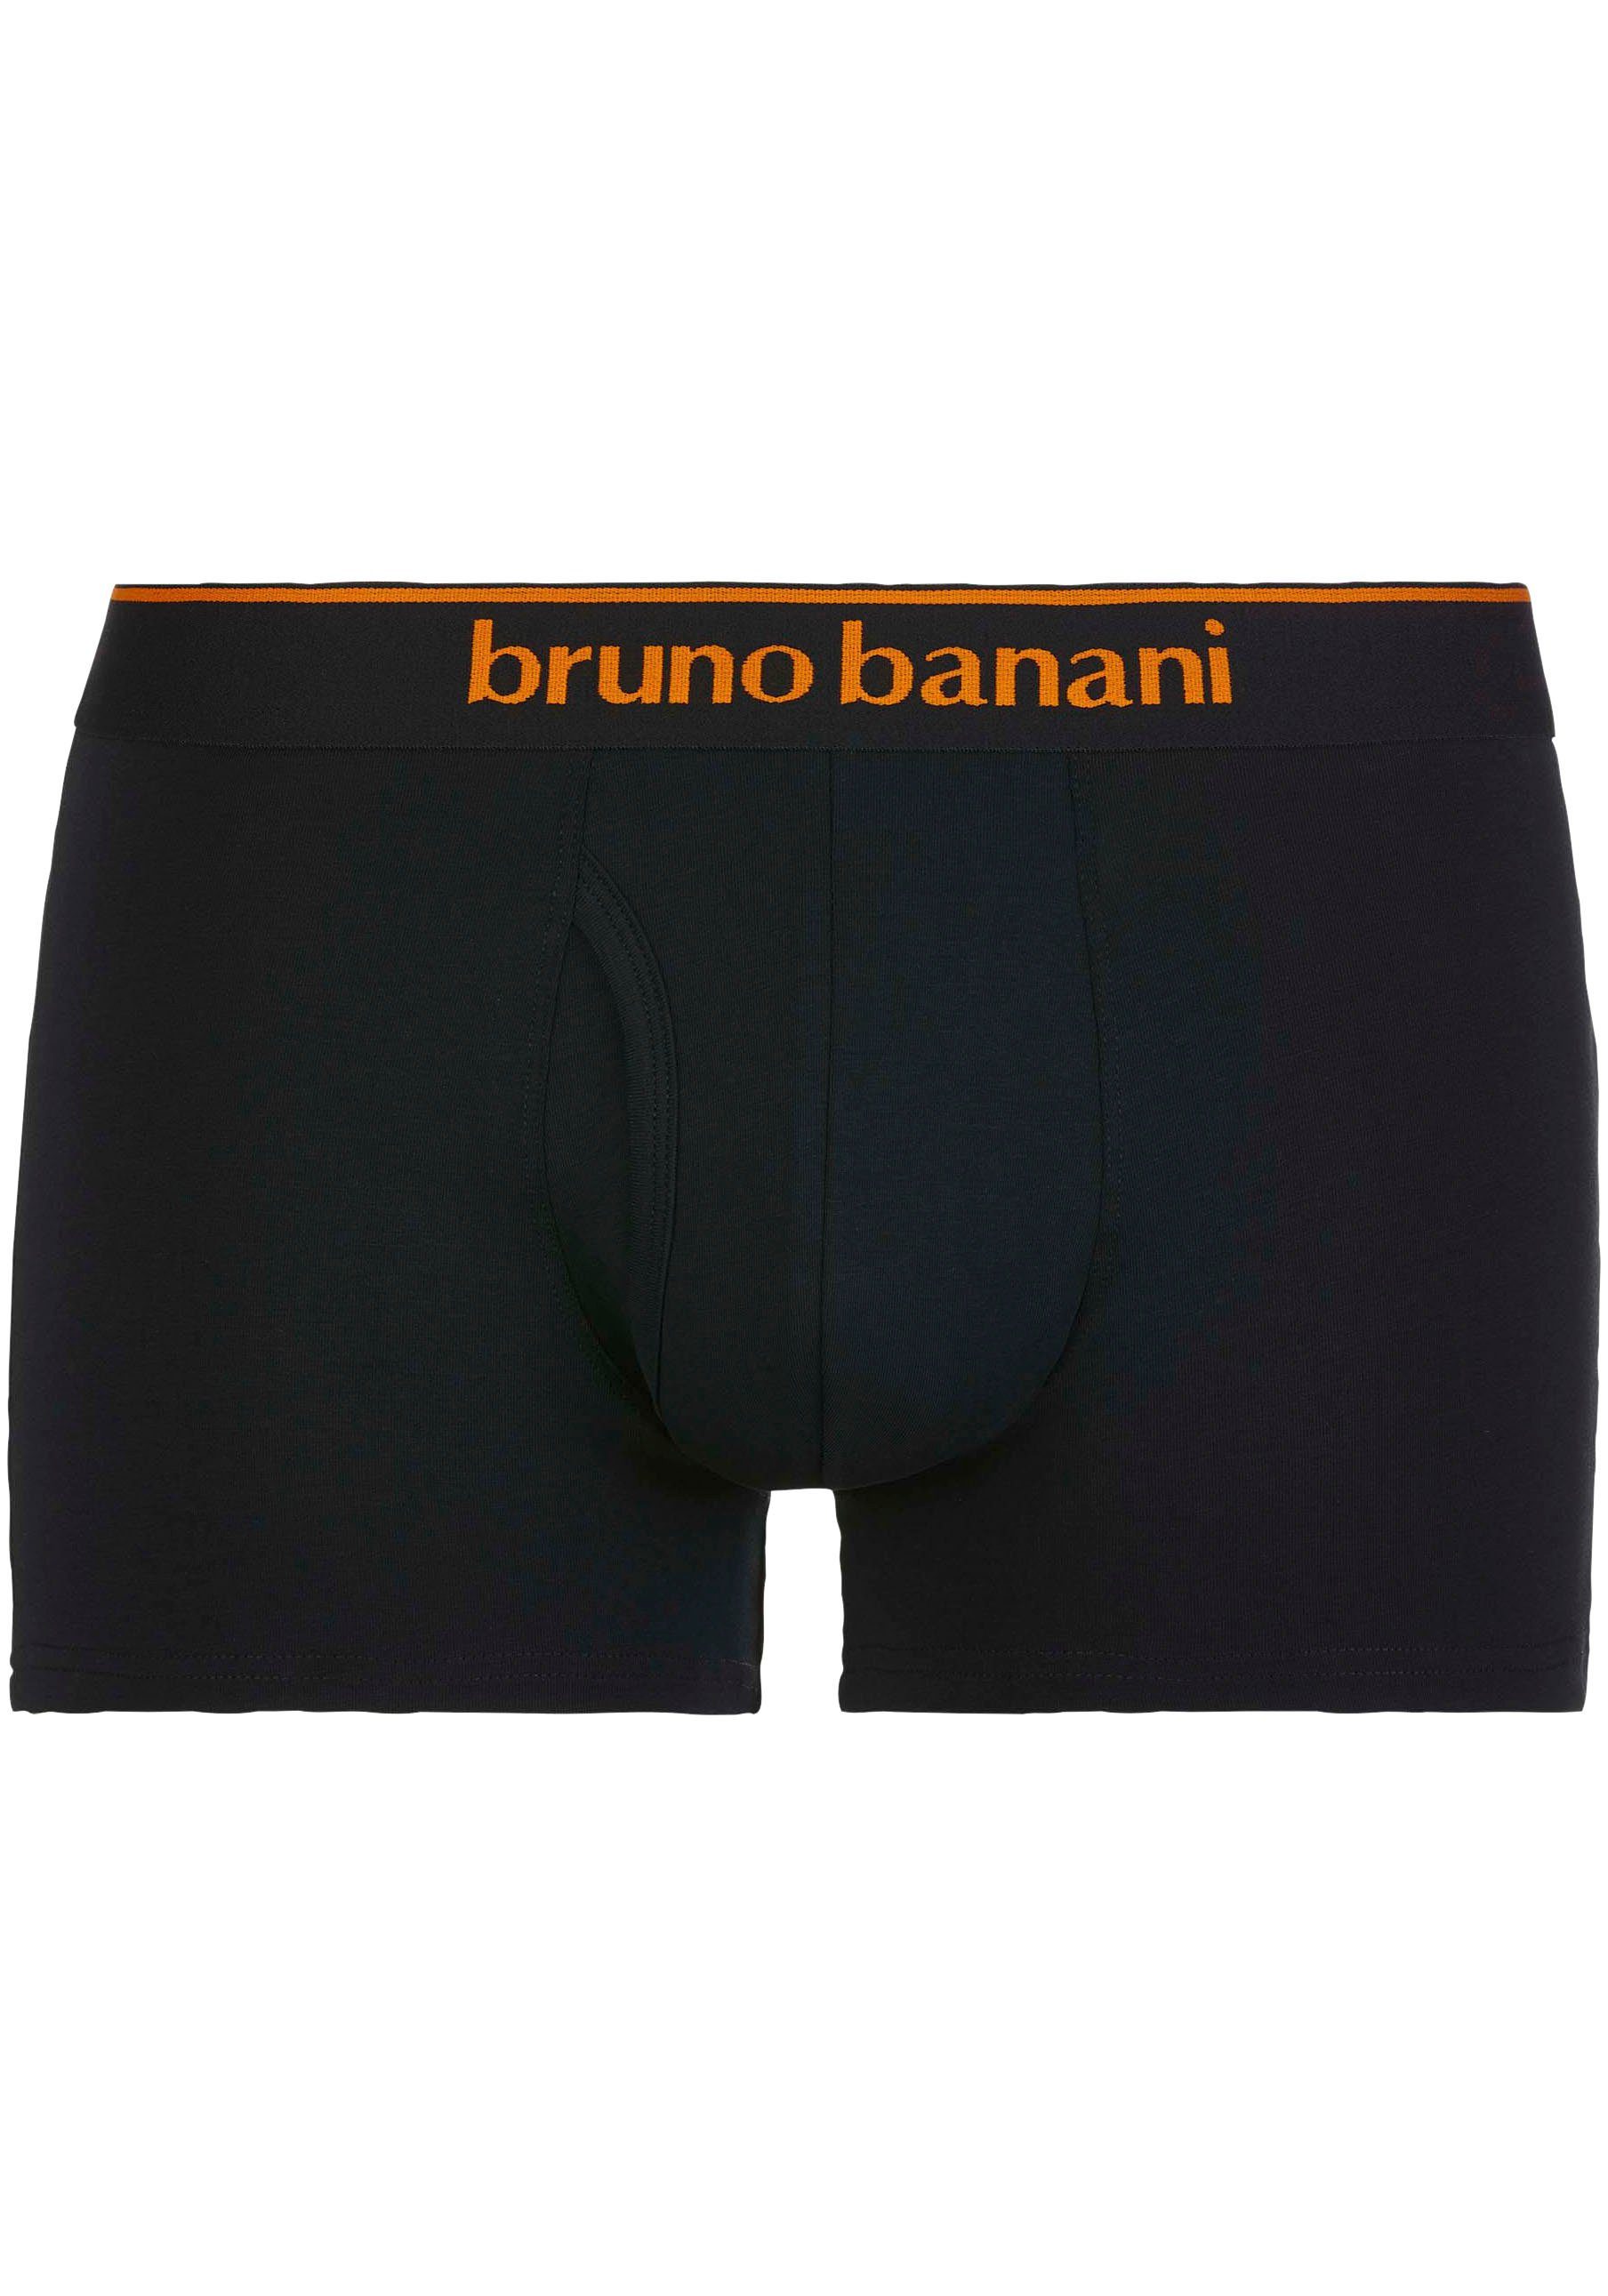 Bruno Banani Boxershorts 2Pack Kontrastfarbene (Packung, Details Short Access schwarz 2-St) Quick